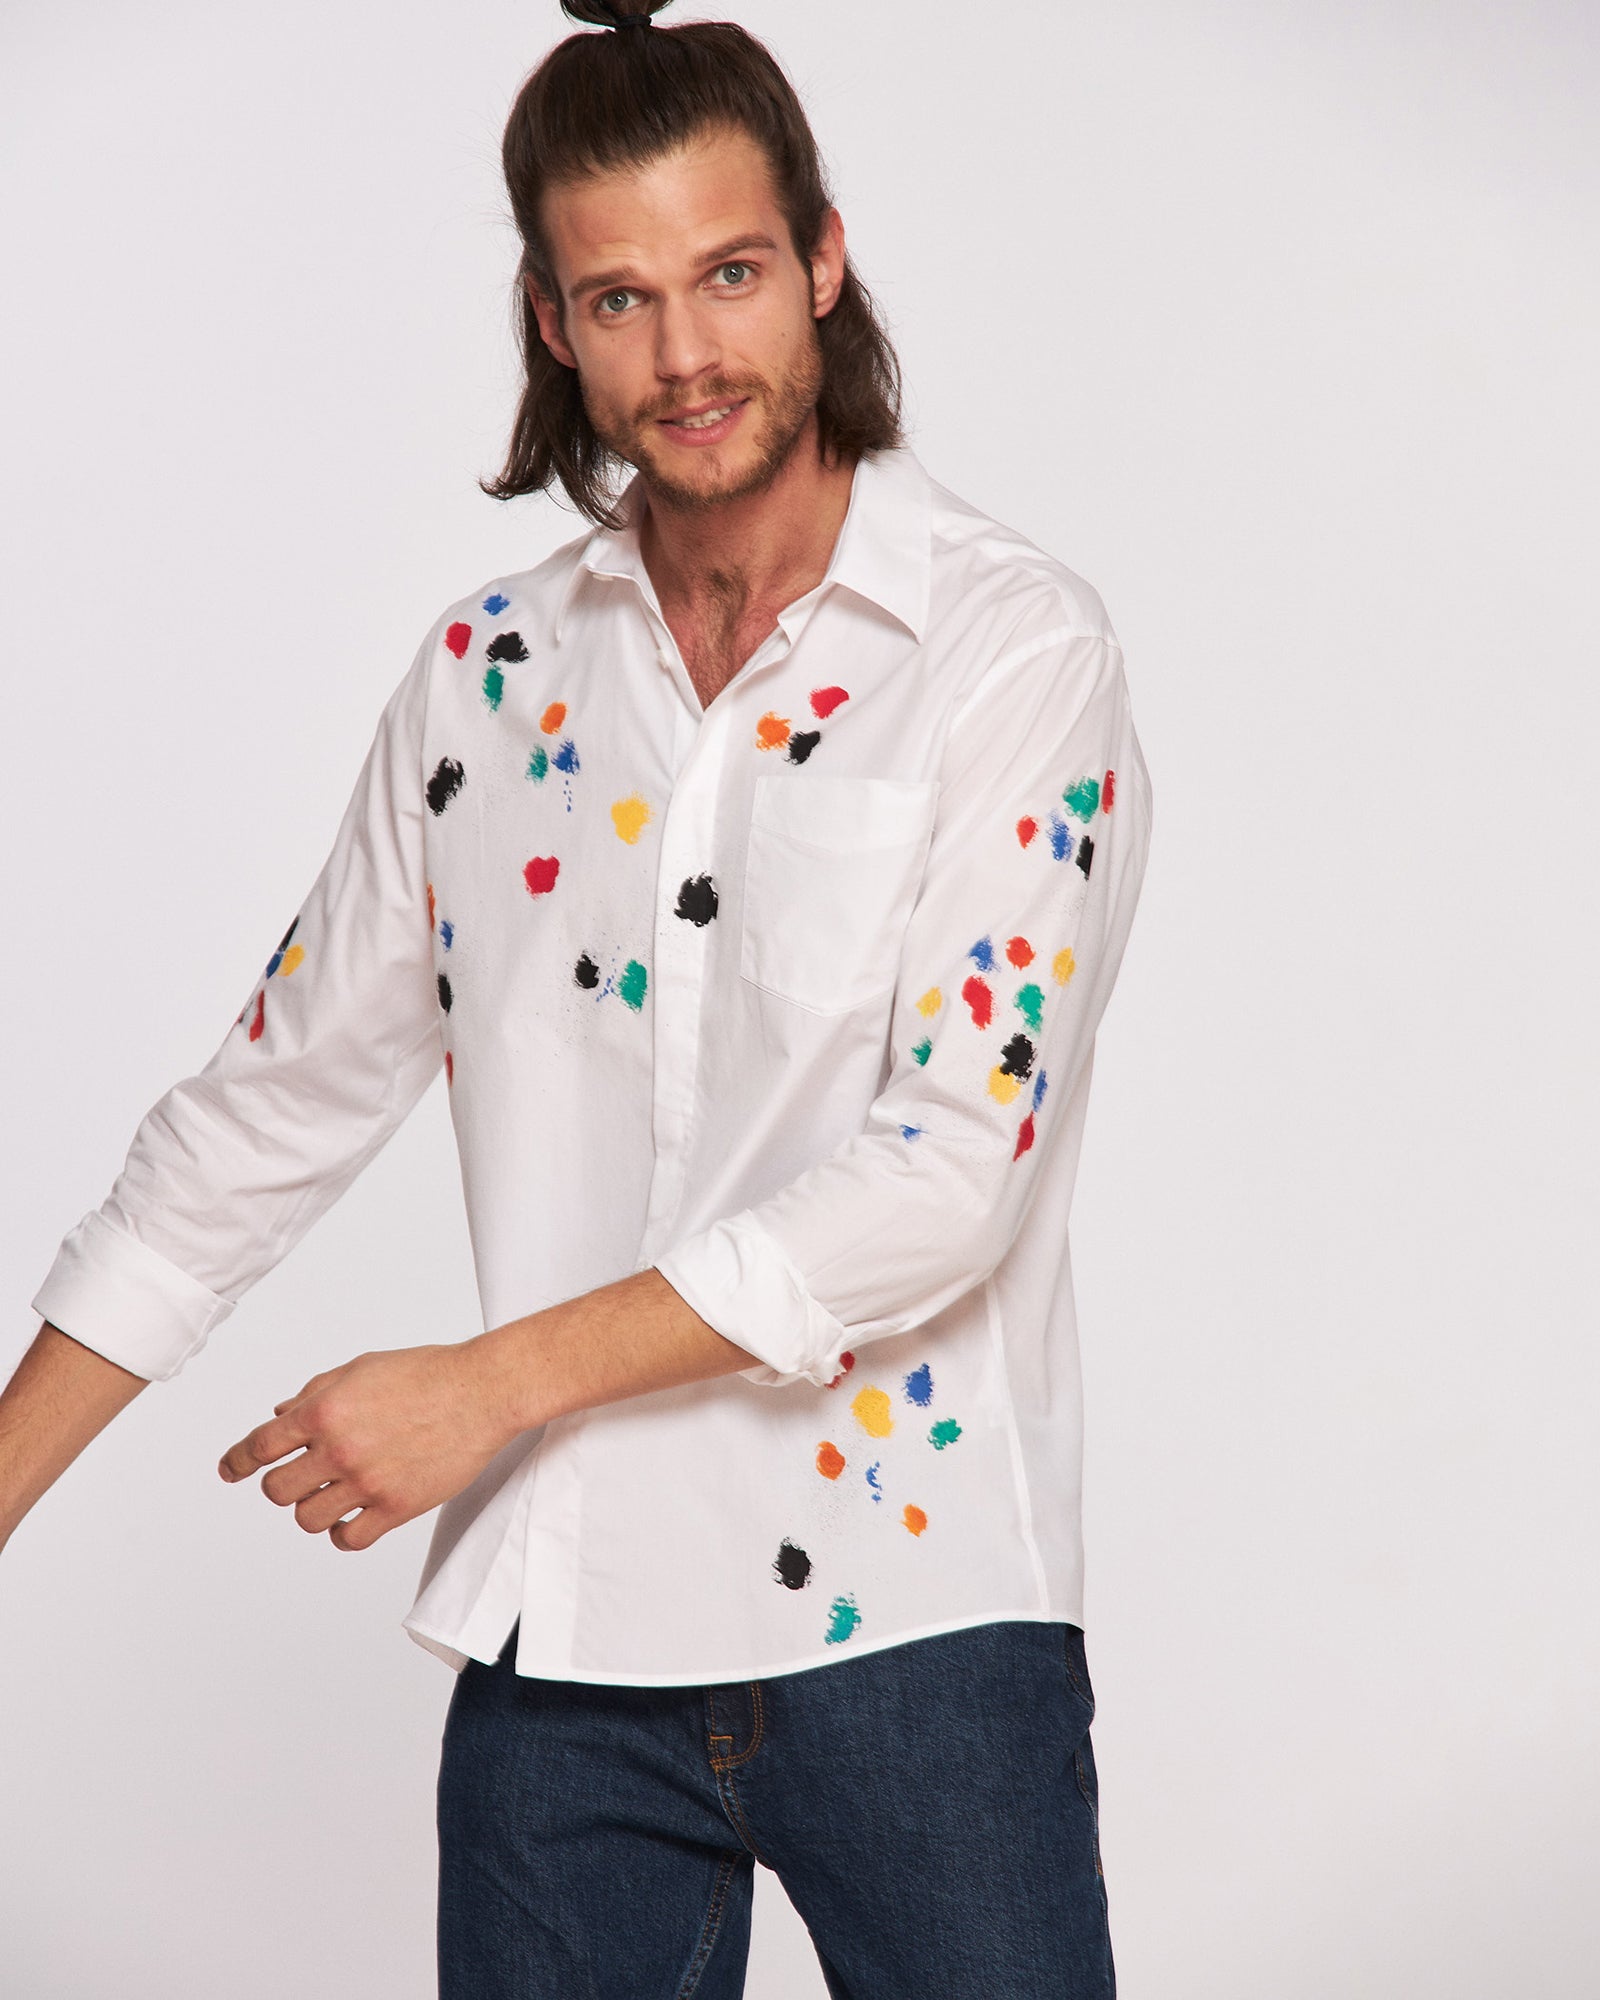 Colorful Spots Hand Painted Men's Shirt